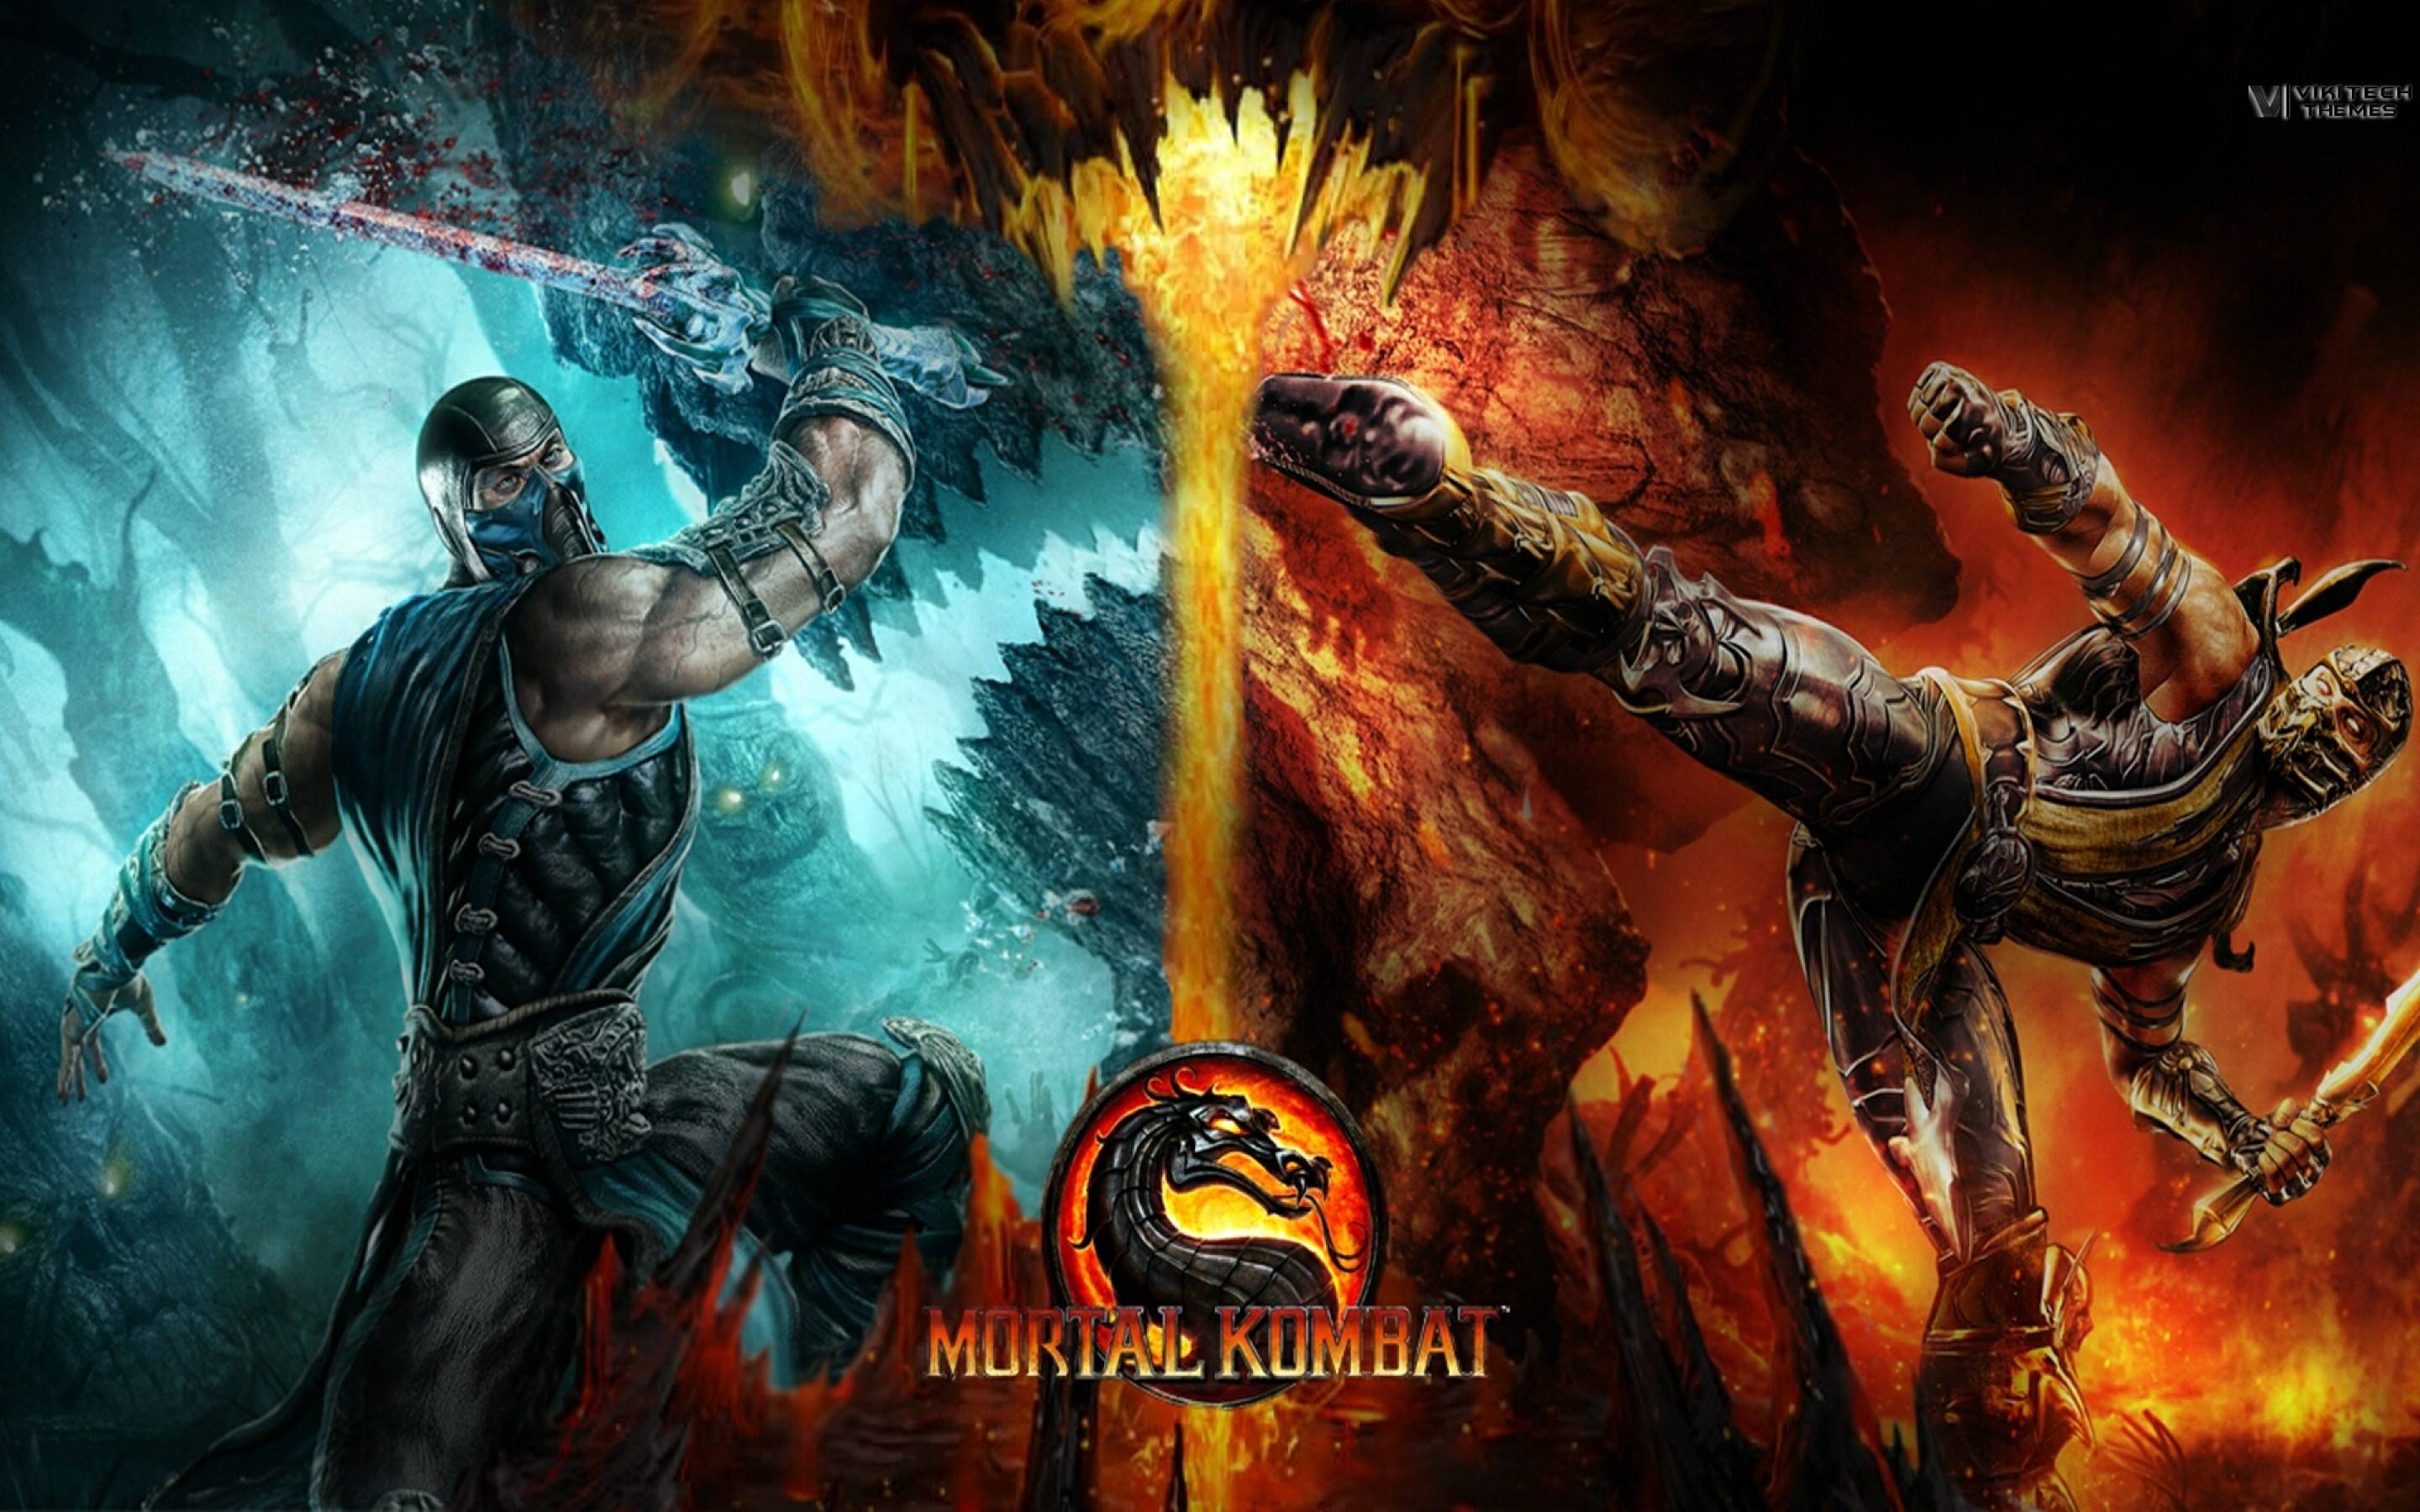 Steam Workshop - Mortal Kombat Kollection